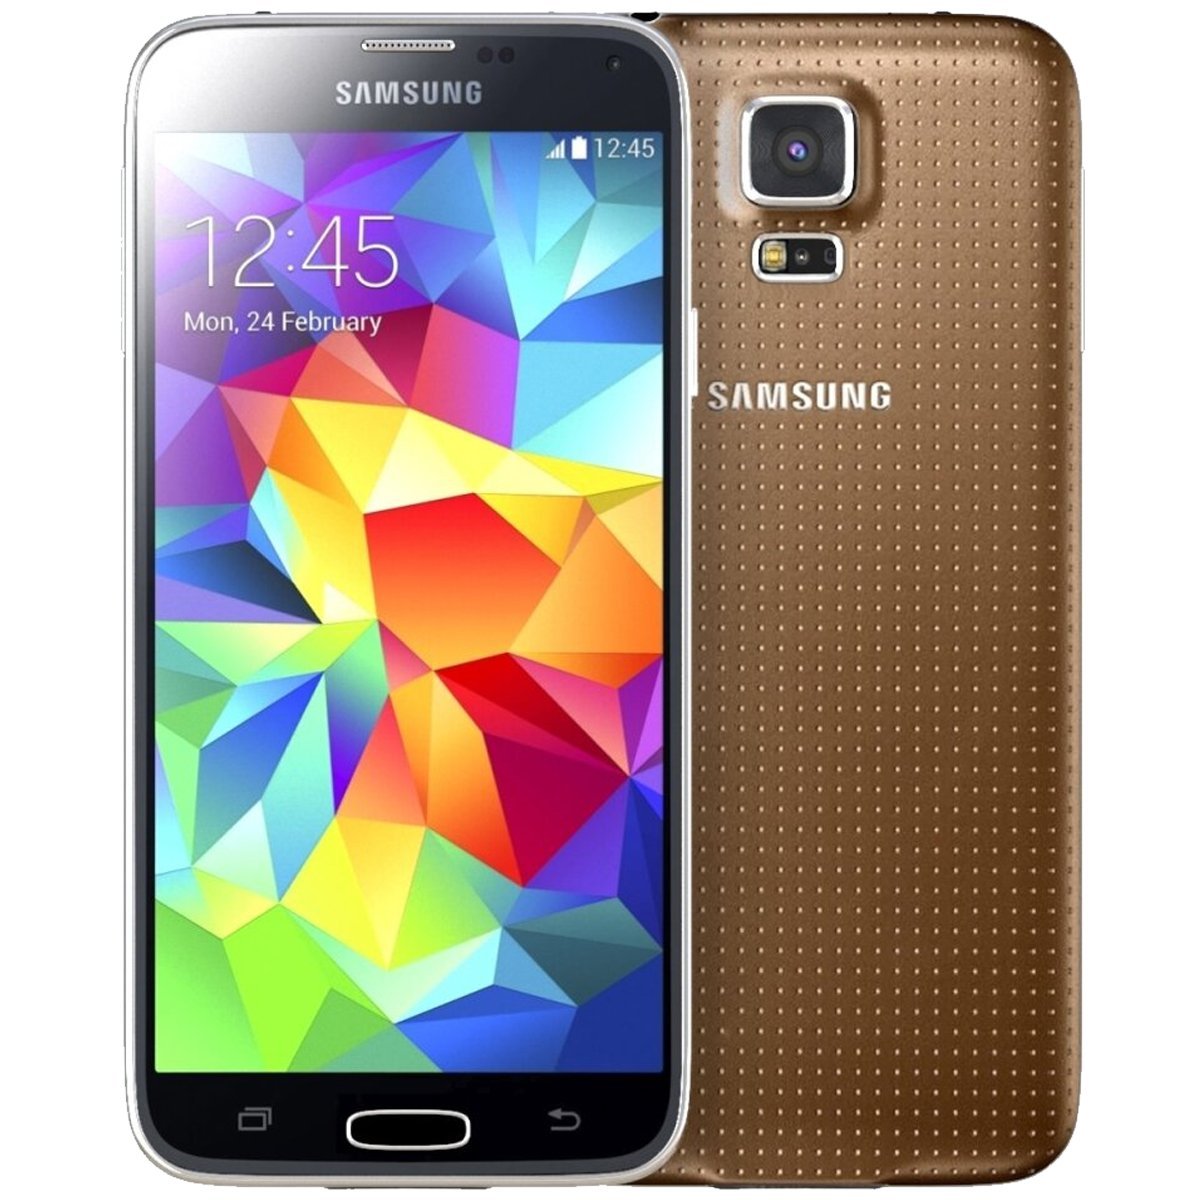 Samsung Galaxy S5 Plus (G901F) Refurbished and Unlocked - RueZone Smartphone Black Pristine 32GB